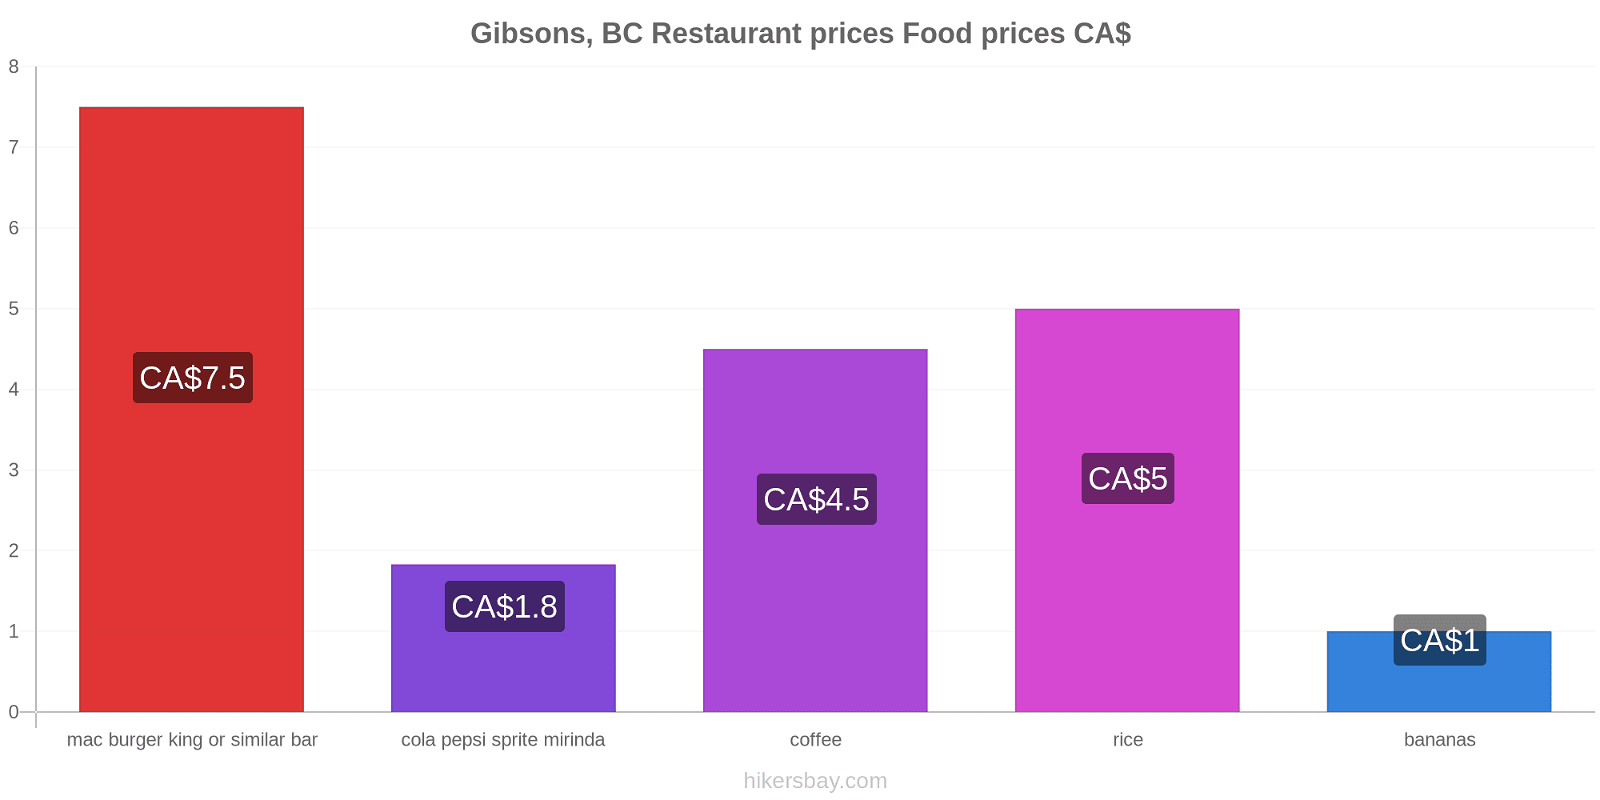 Gibsons, BC price changes hikersbay.com